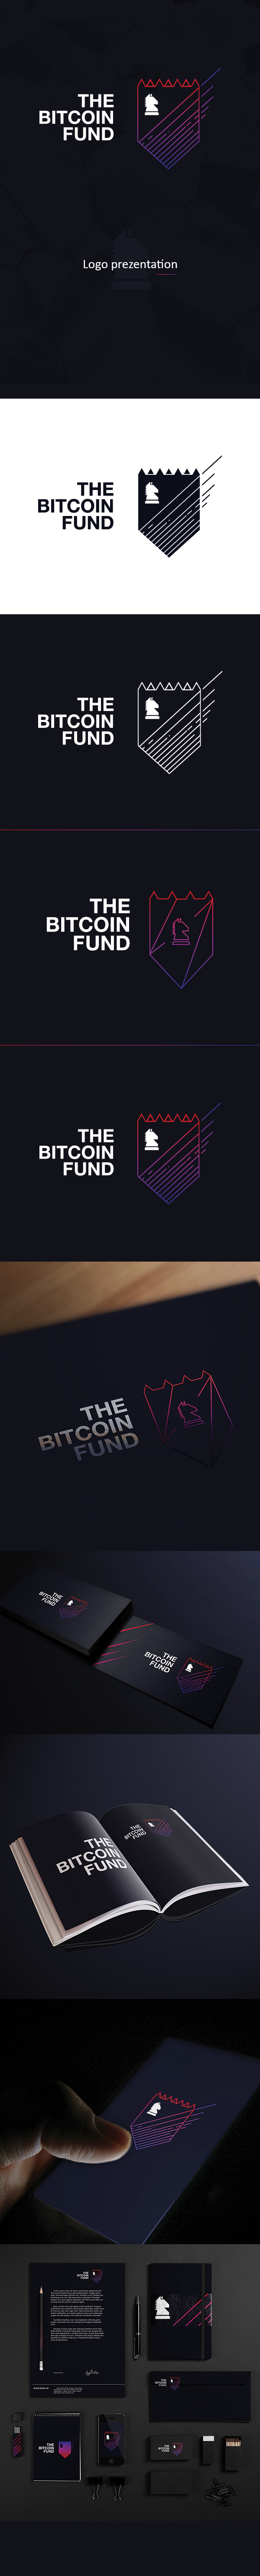 Bitcoins bitcoin fund horse shield Fund Stationary design fresh colours fresh logo